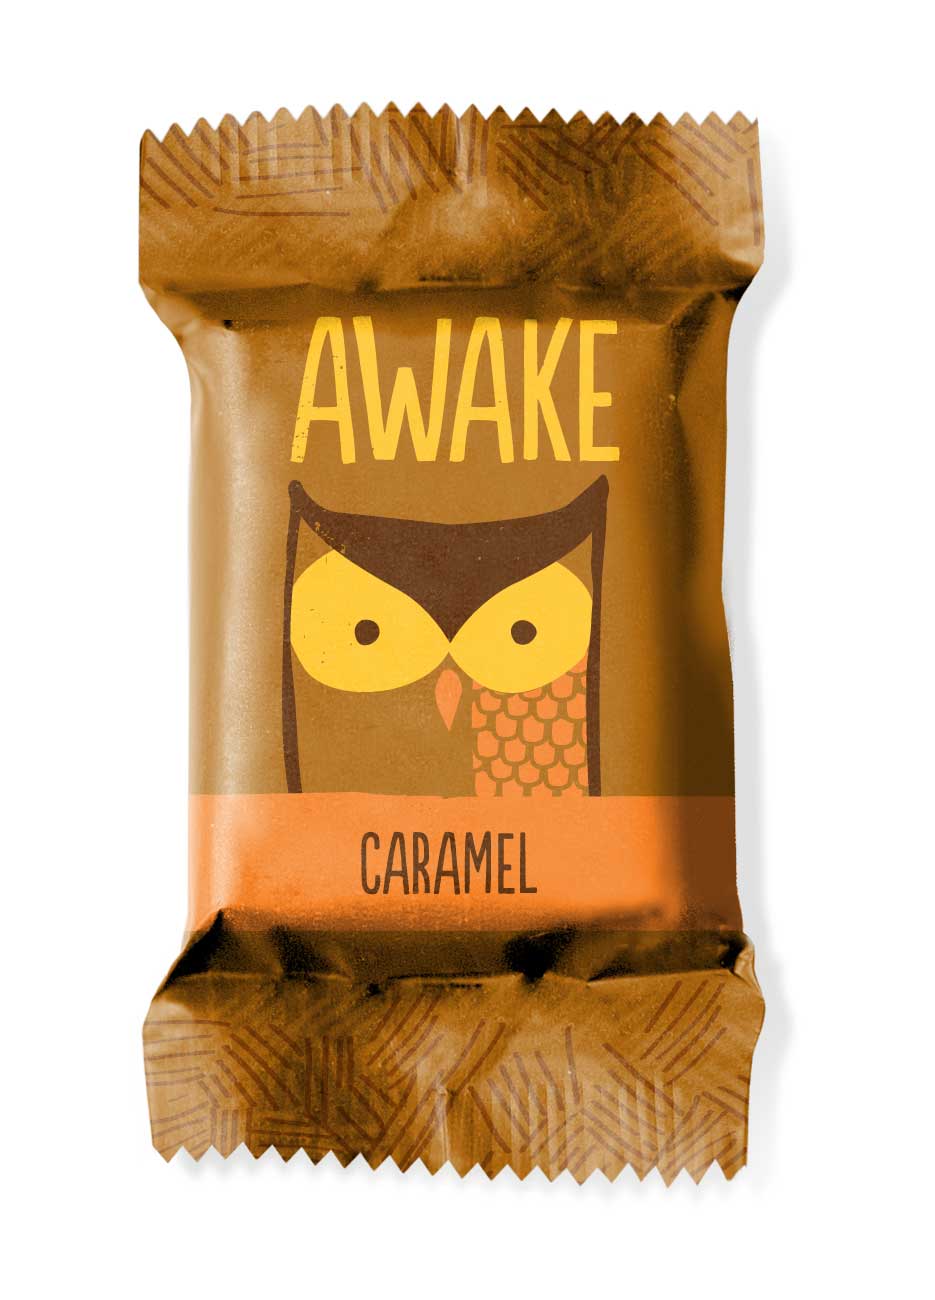 Awake Singles Caramel Caffeinated Chocolate Bites 0.58 Oz Bar